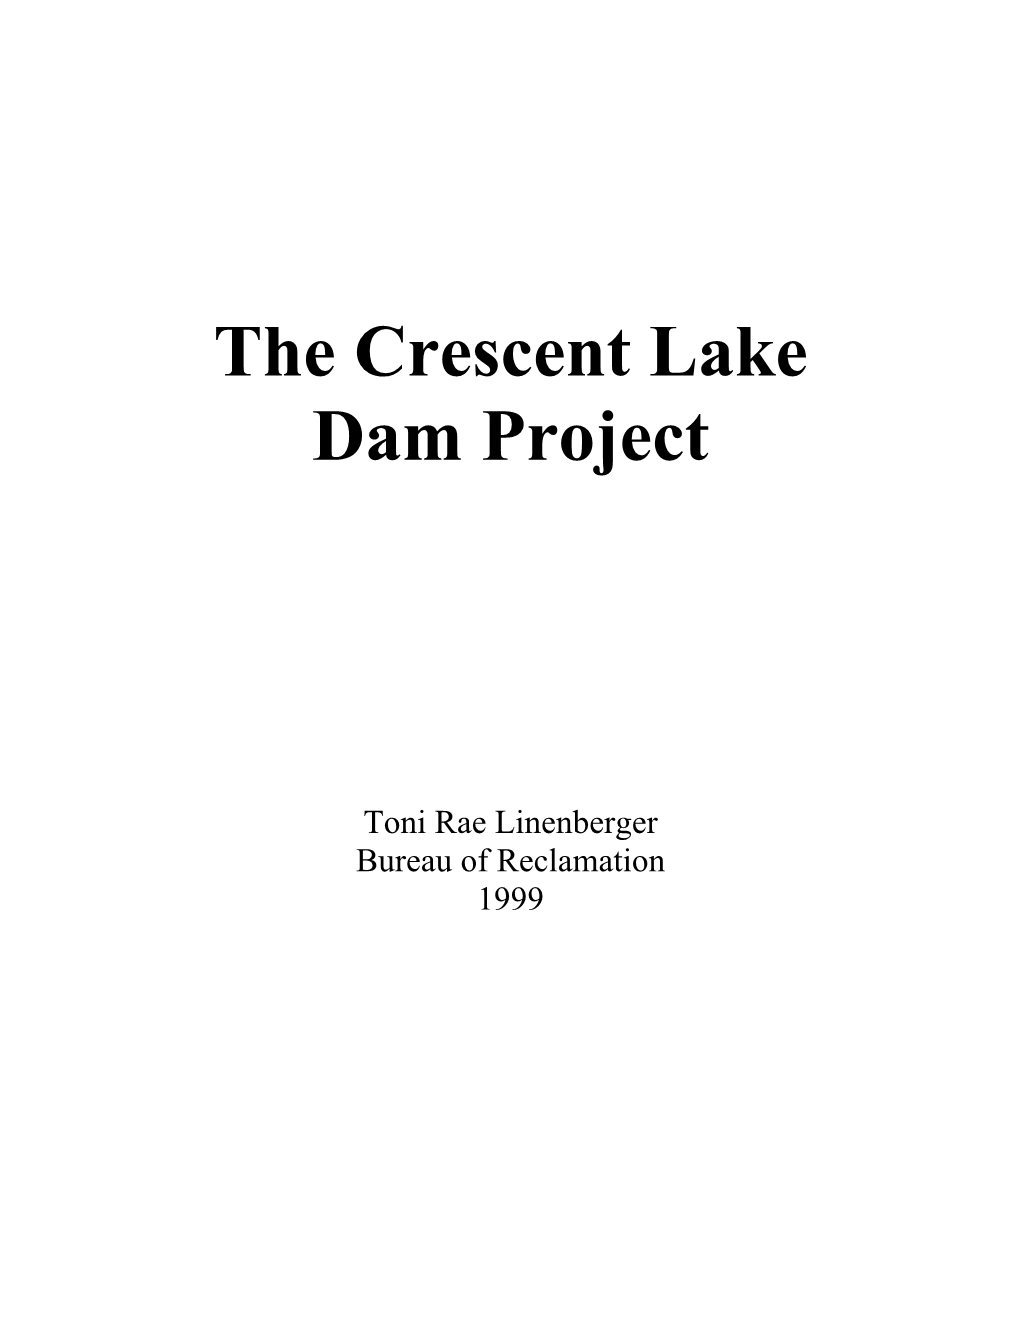 Crescent Lake Dam Project, Oregon.” Crescent Lake, Oregon: January 1958